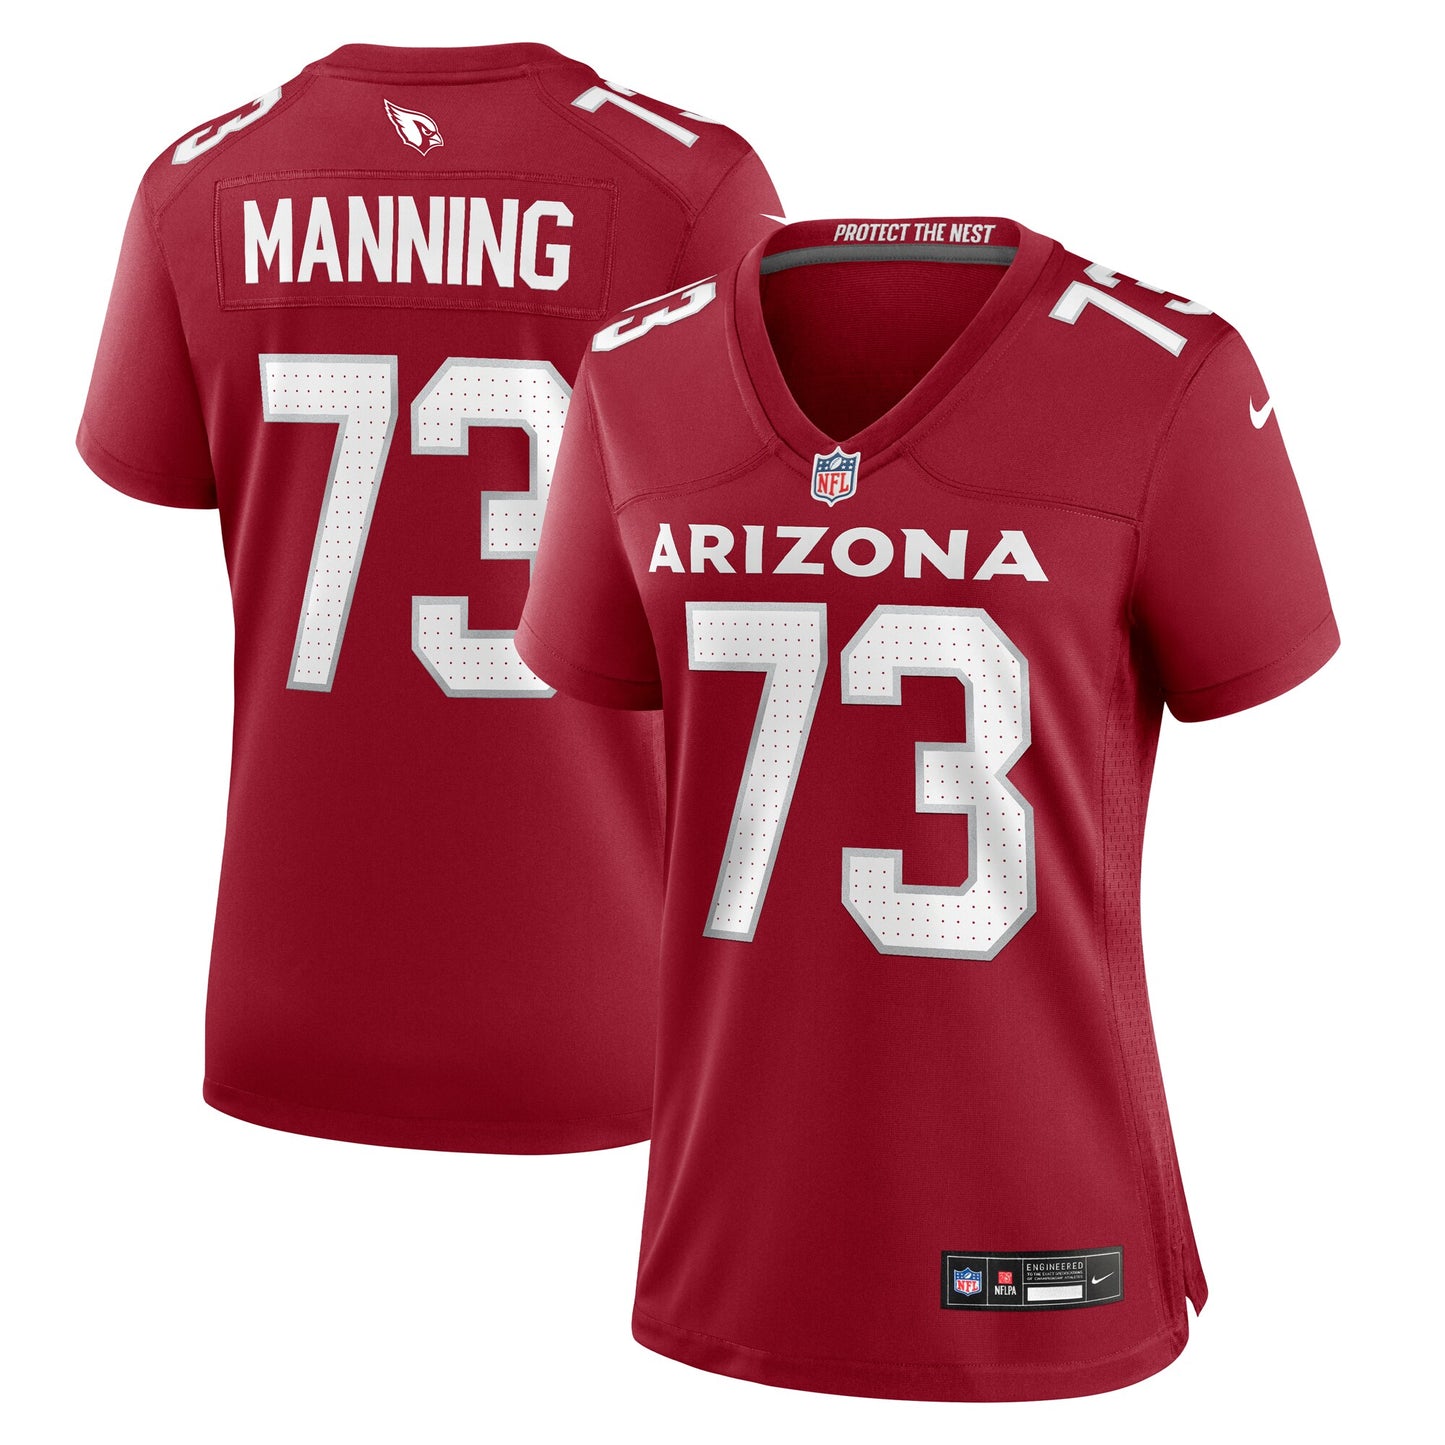 Ilm Manning Arizona Cardinals Nike Women's Team Game Jersey - Cardinal